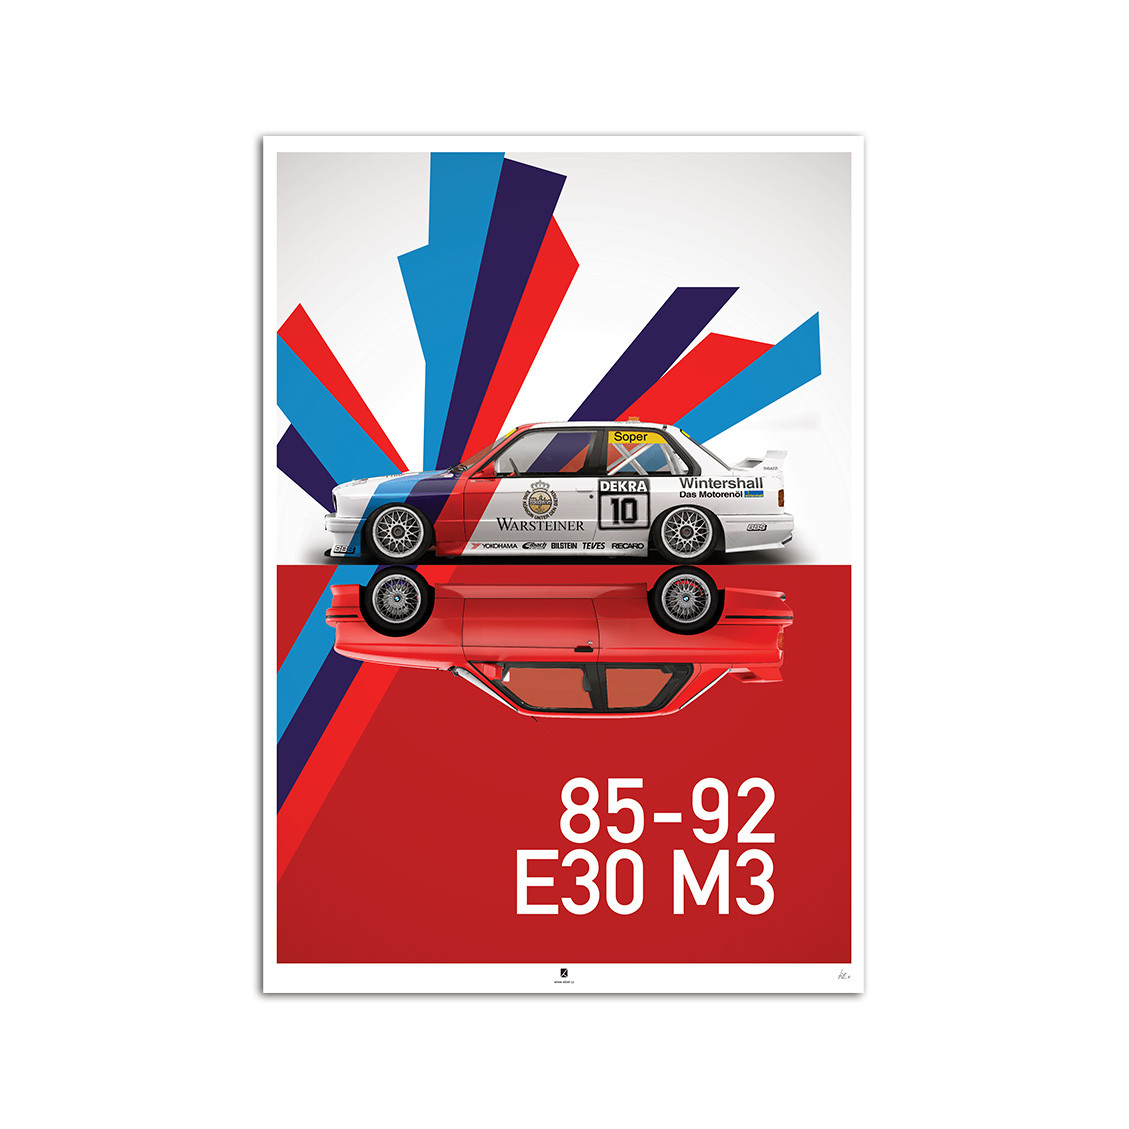 Lubor Zelinka - BMW E30 M3 poster series